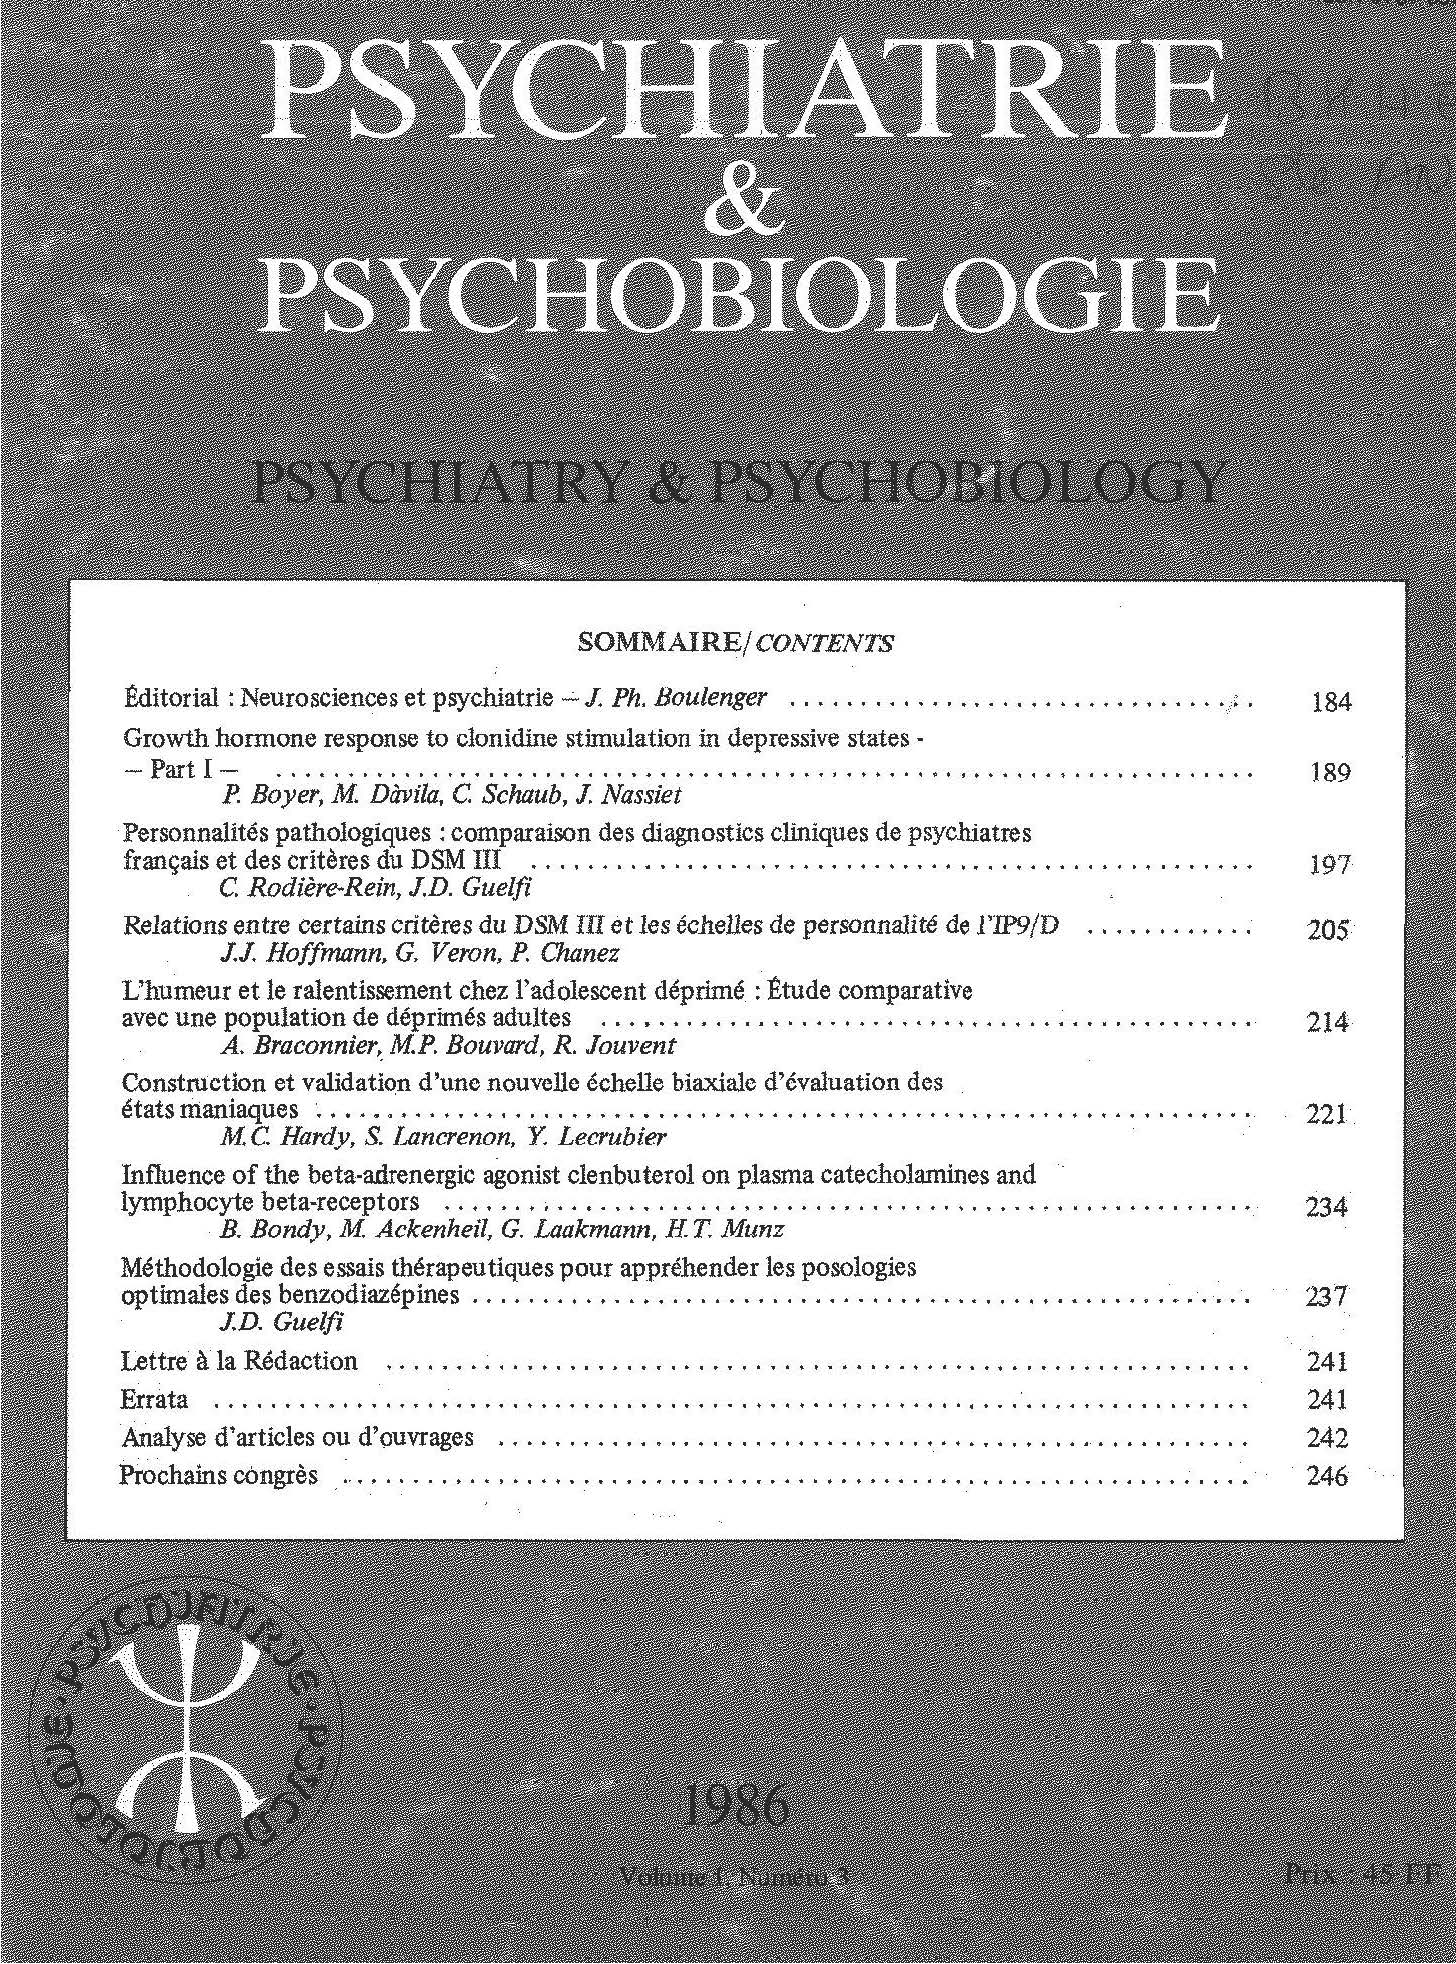 Psychiatry and Psychobiology